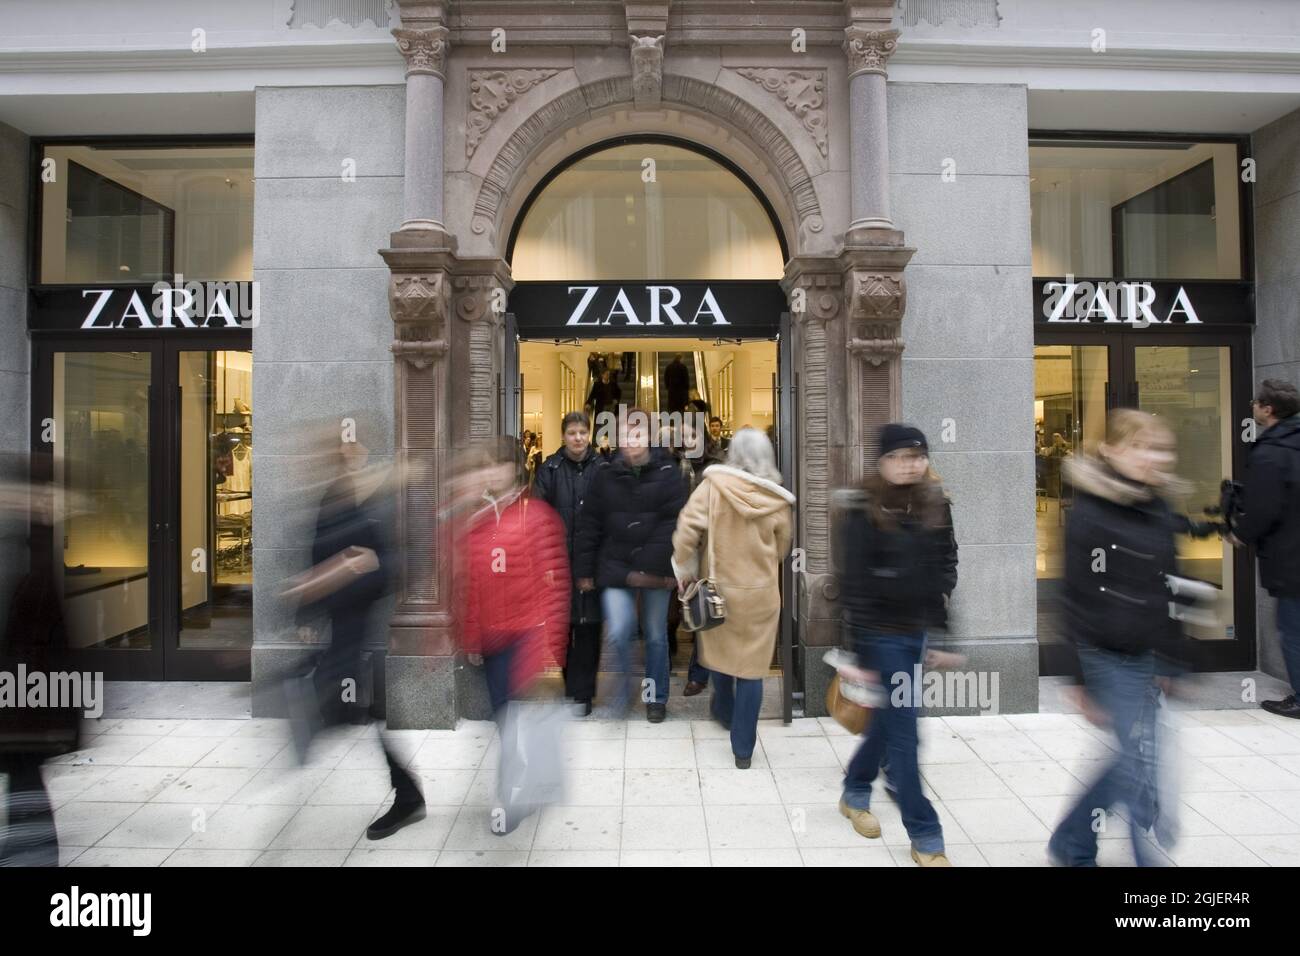 Spanish clothing store Zara in Drottninggatan, Stockholm Stock Photo - Alamy